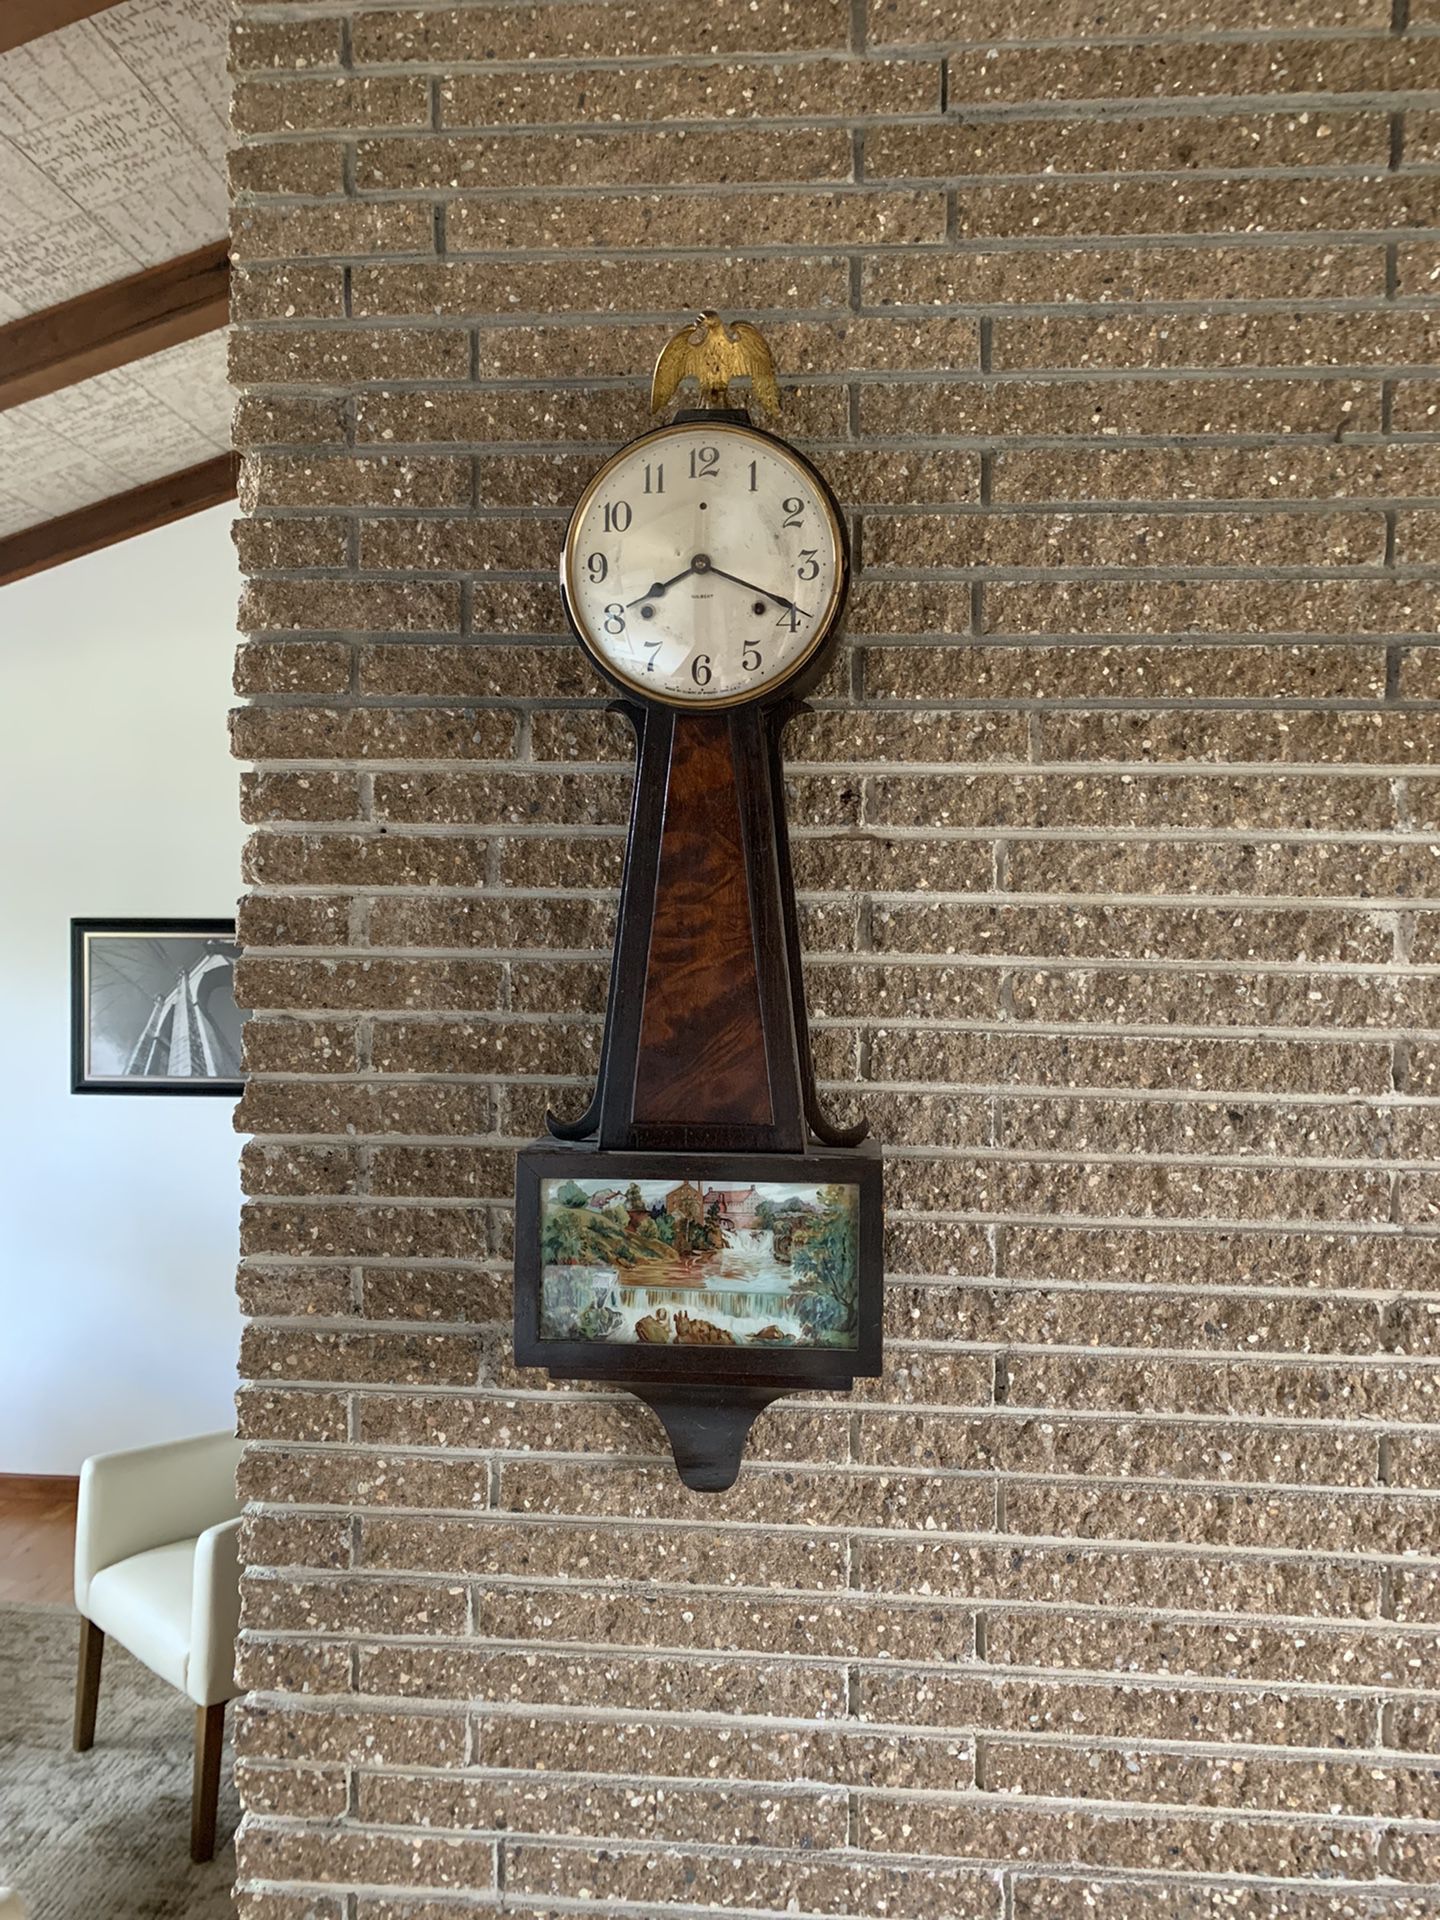 Beautiful old Gilbert banjo clock -runs well!!